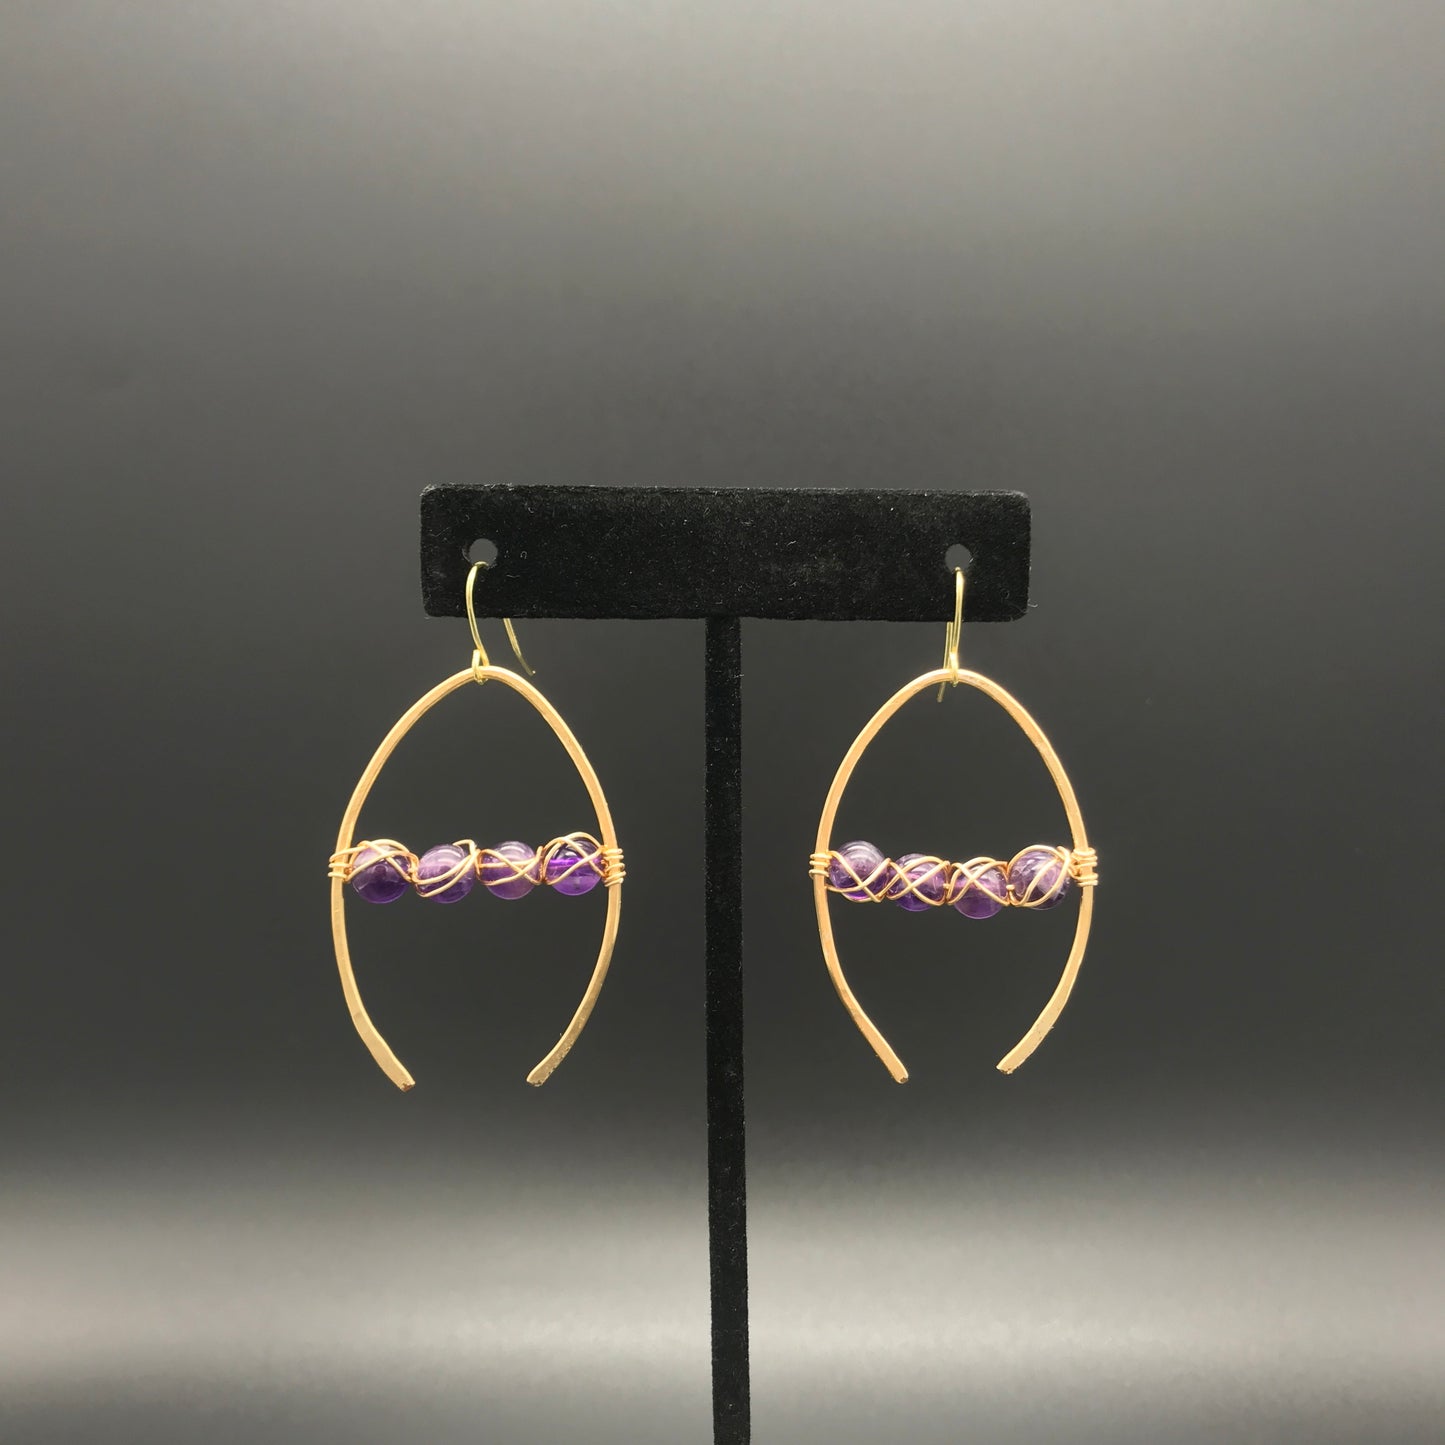 Amethyst earrings in gold colored wishbone shaped wire. Rocking Glass Studio